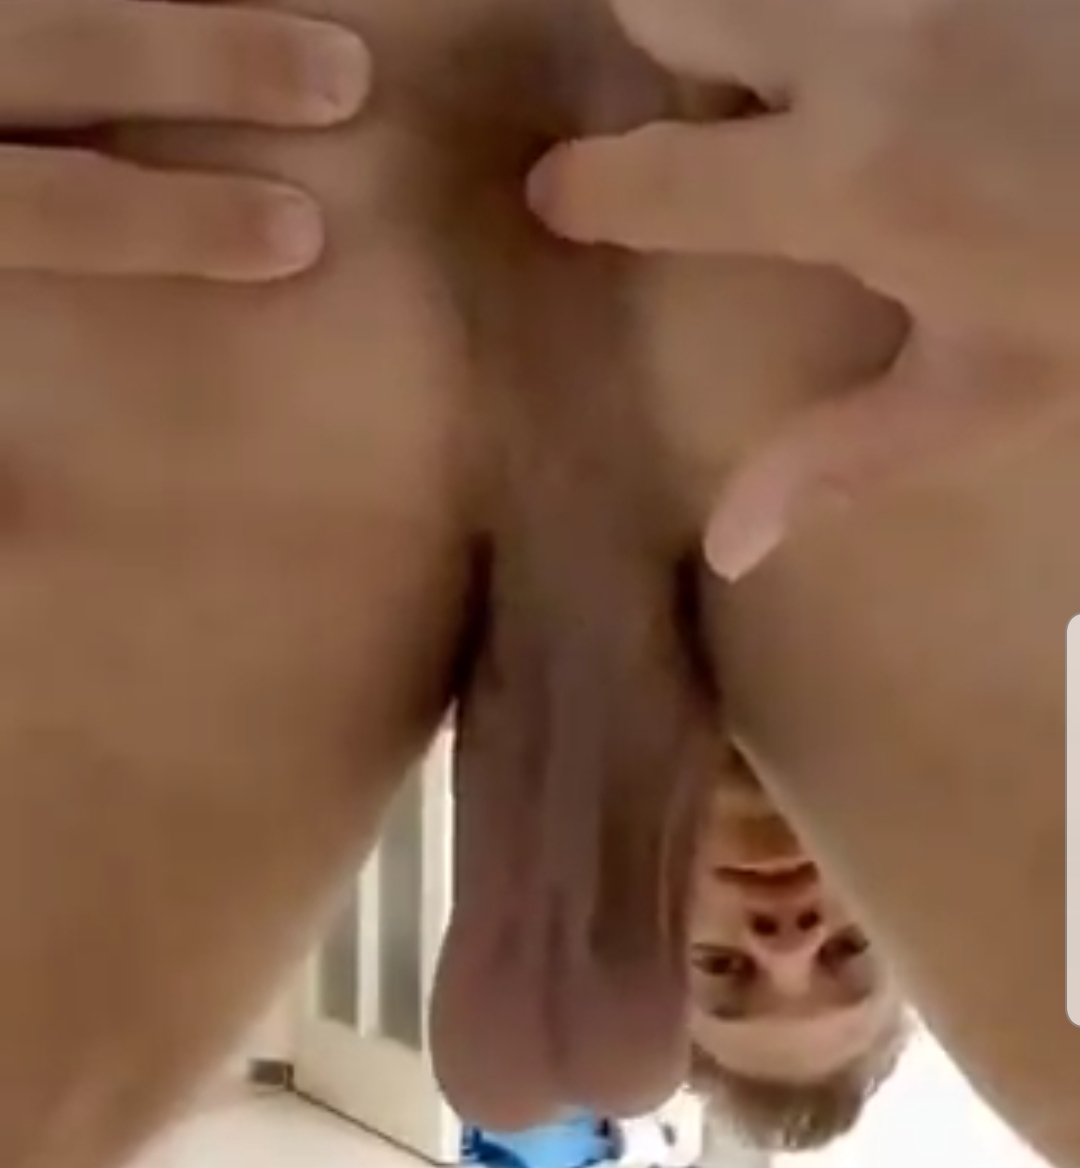 Uncut muscle guy sticks finger up his butt then licks it